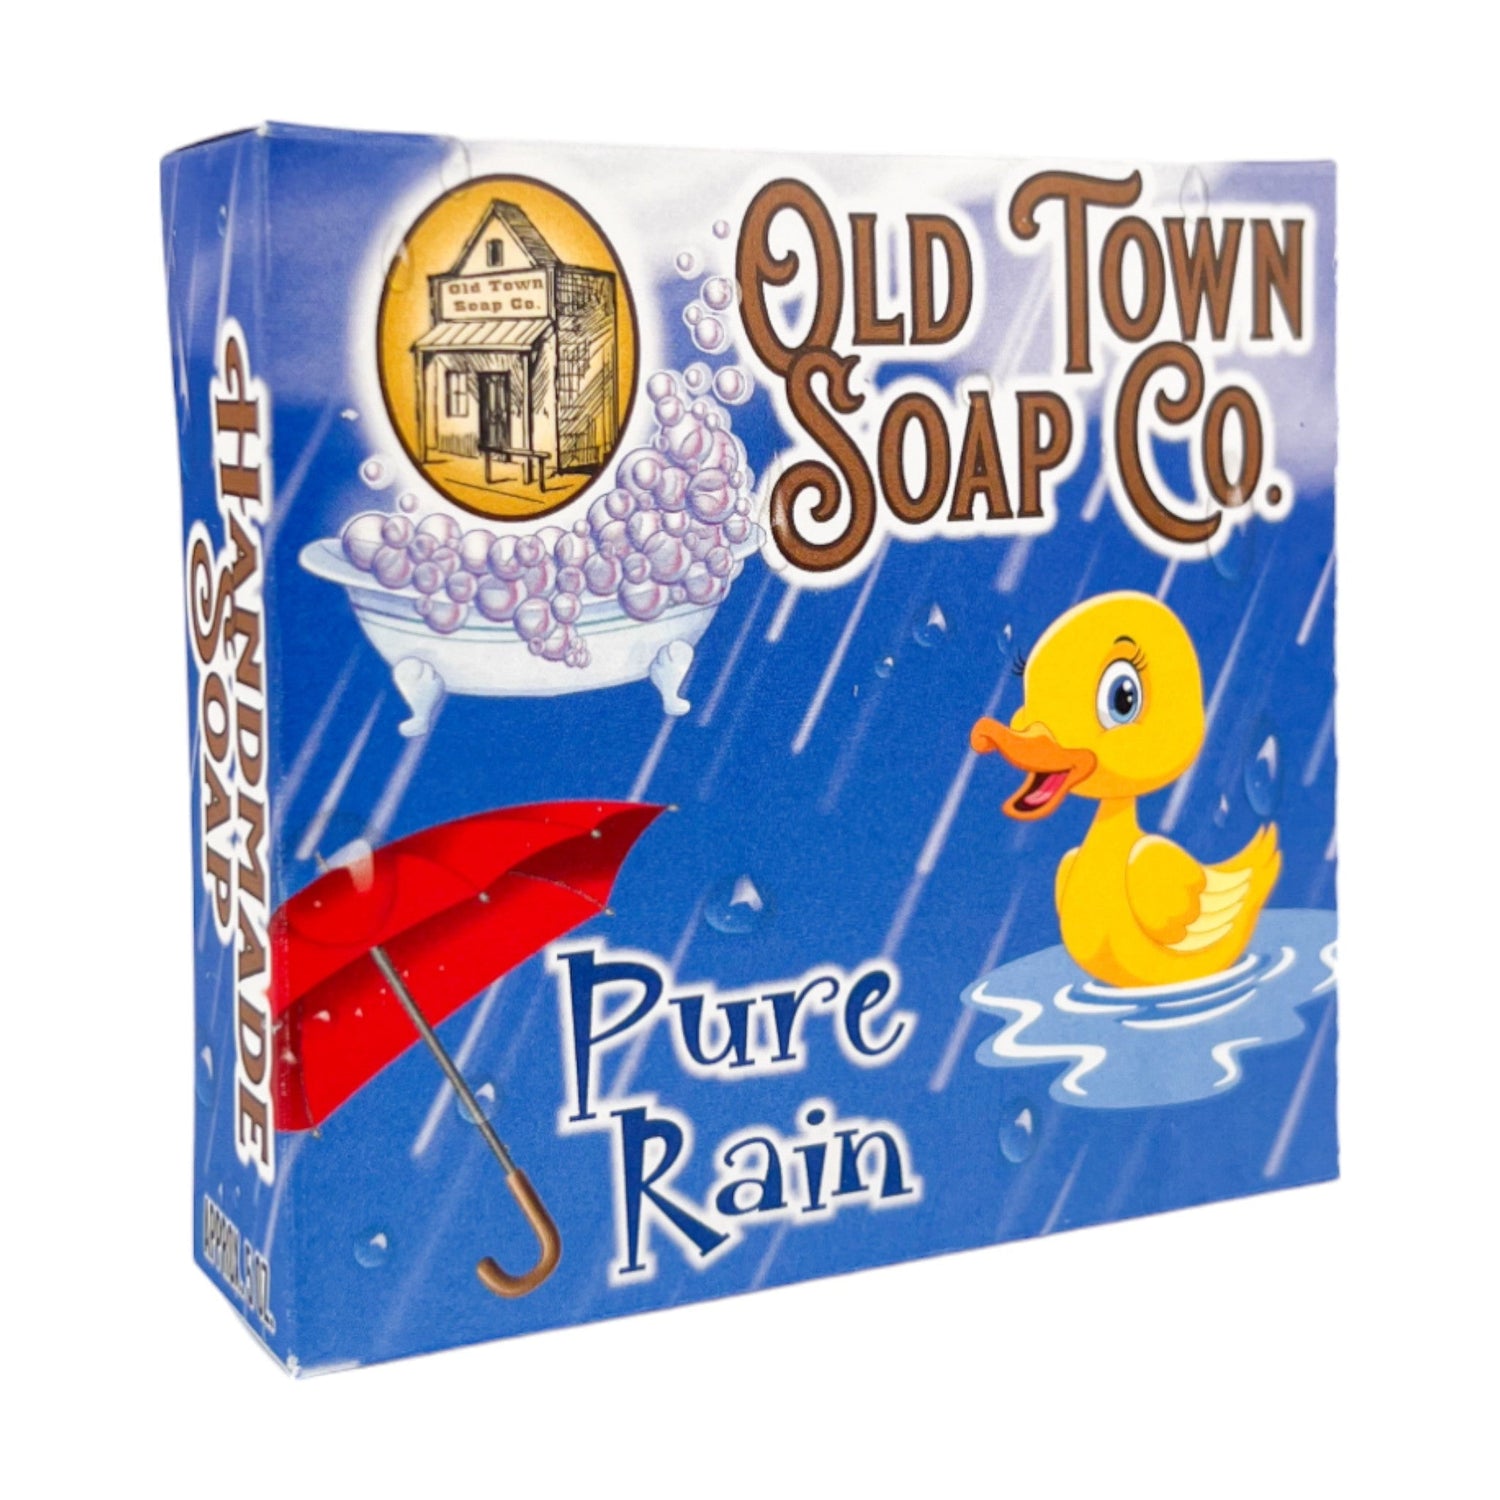 Pure Rain -Bar Soap - Old Town Soap Co.